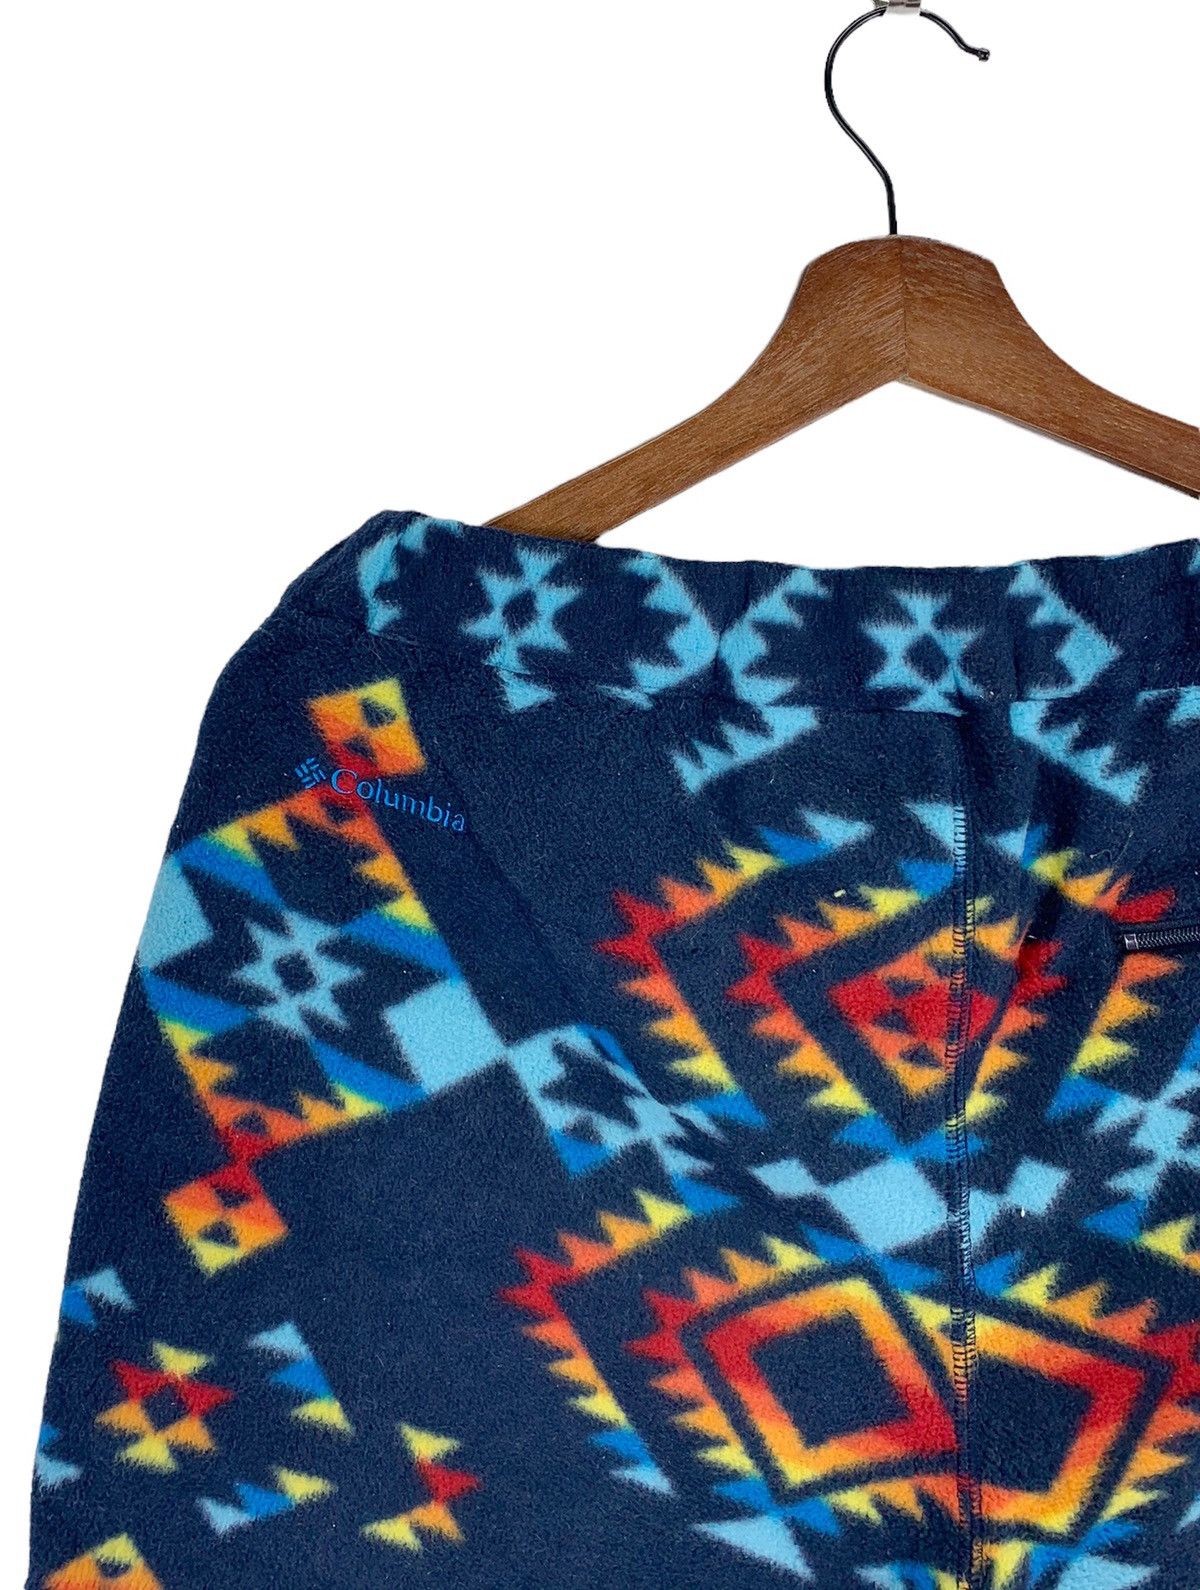 Columbia Columbia Native Multicolour Aztec Fleece Short Size US 30 / EU 46 - 8 Preview